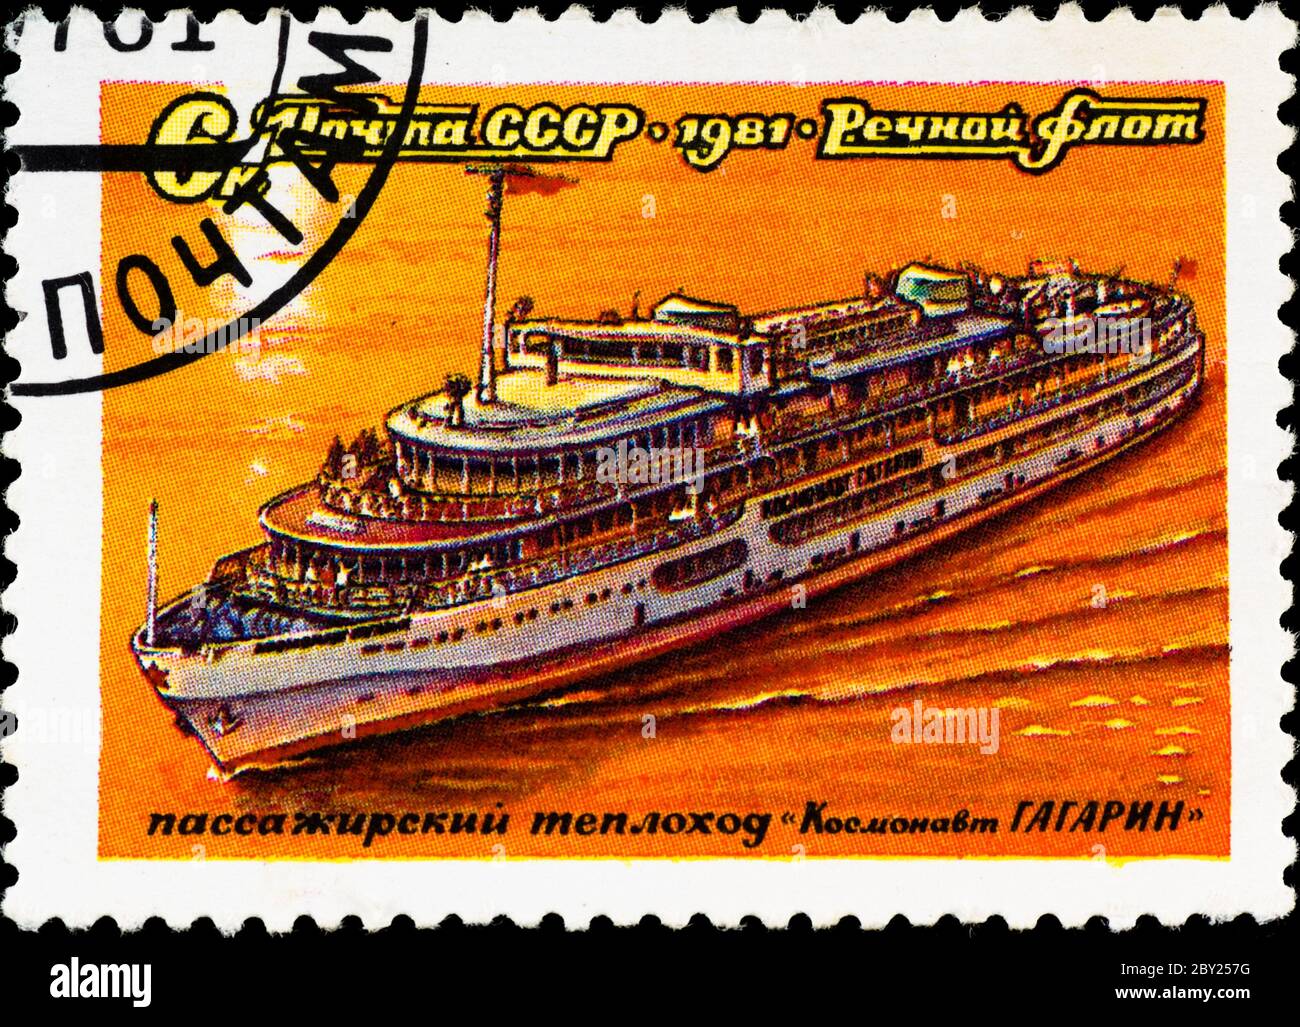 postage stamp show ship Cosmonaut Gagarin Stock Photo